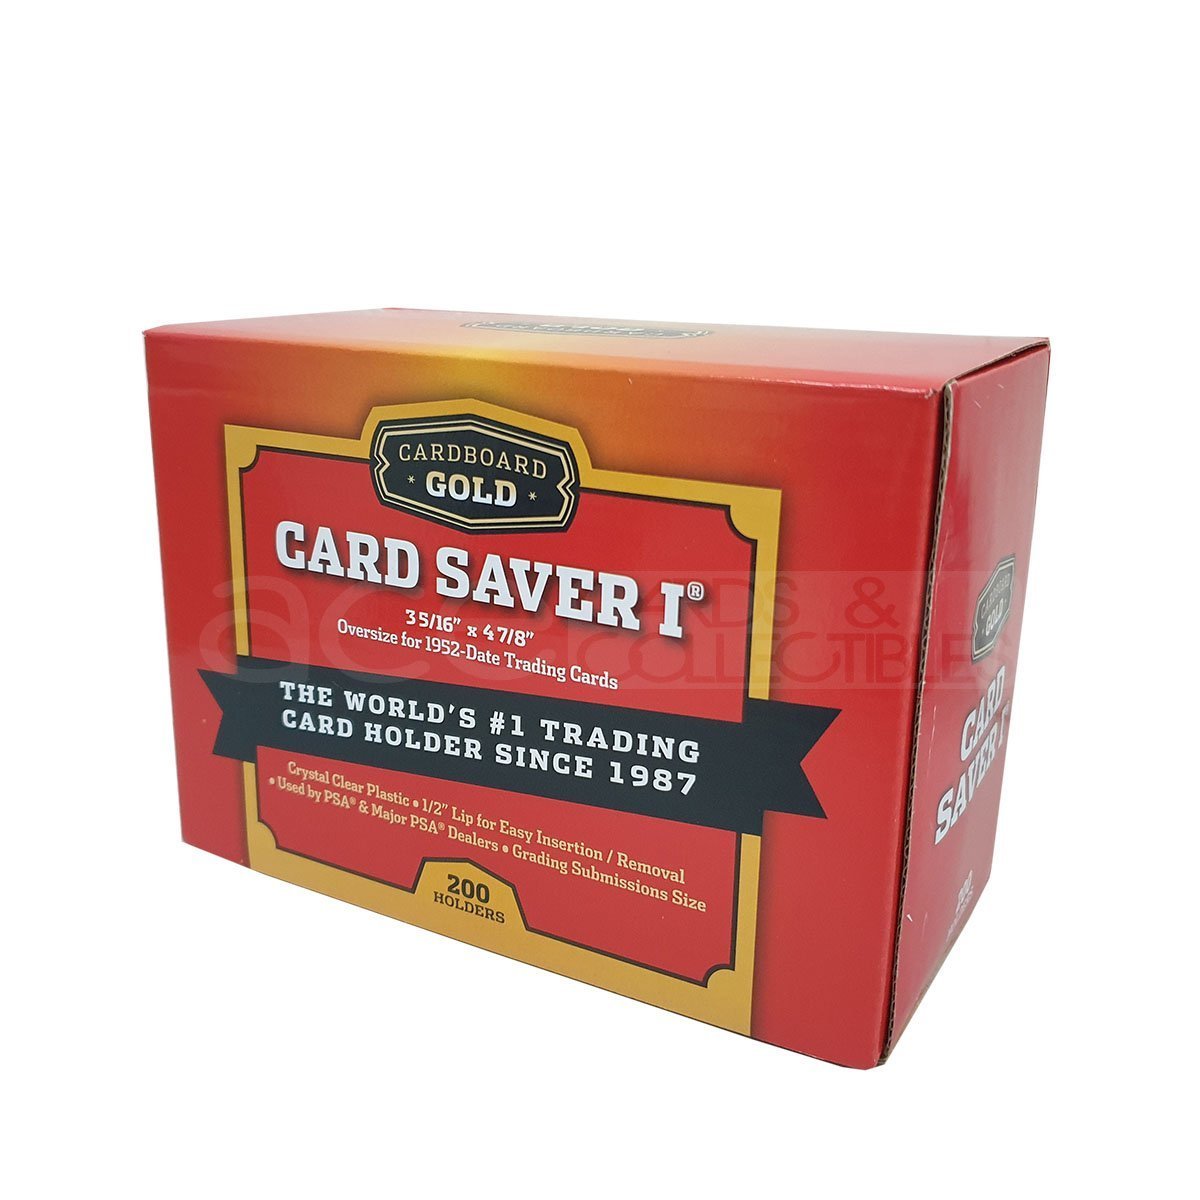 5 Cardboard Gold Card Saver 1 Semi-Rigid (For PSA BGS SGC Grading)